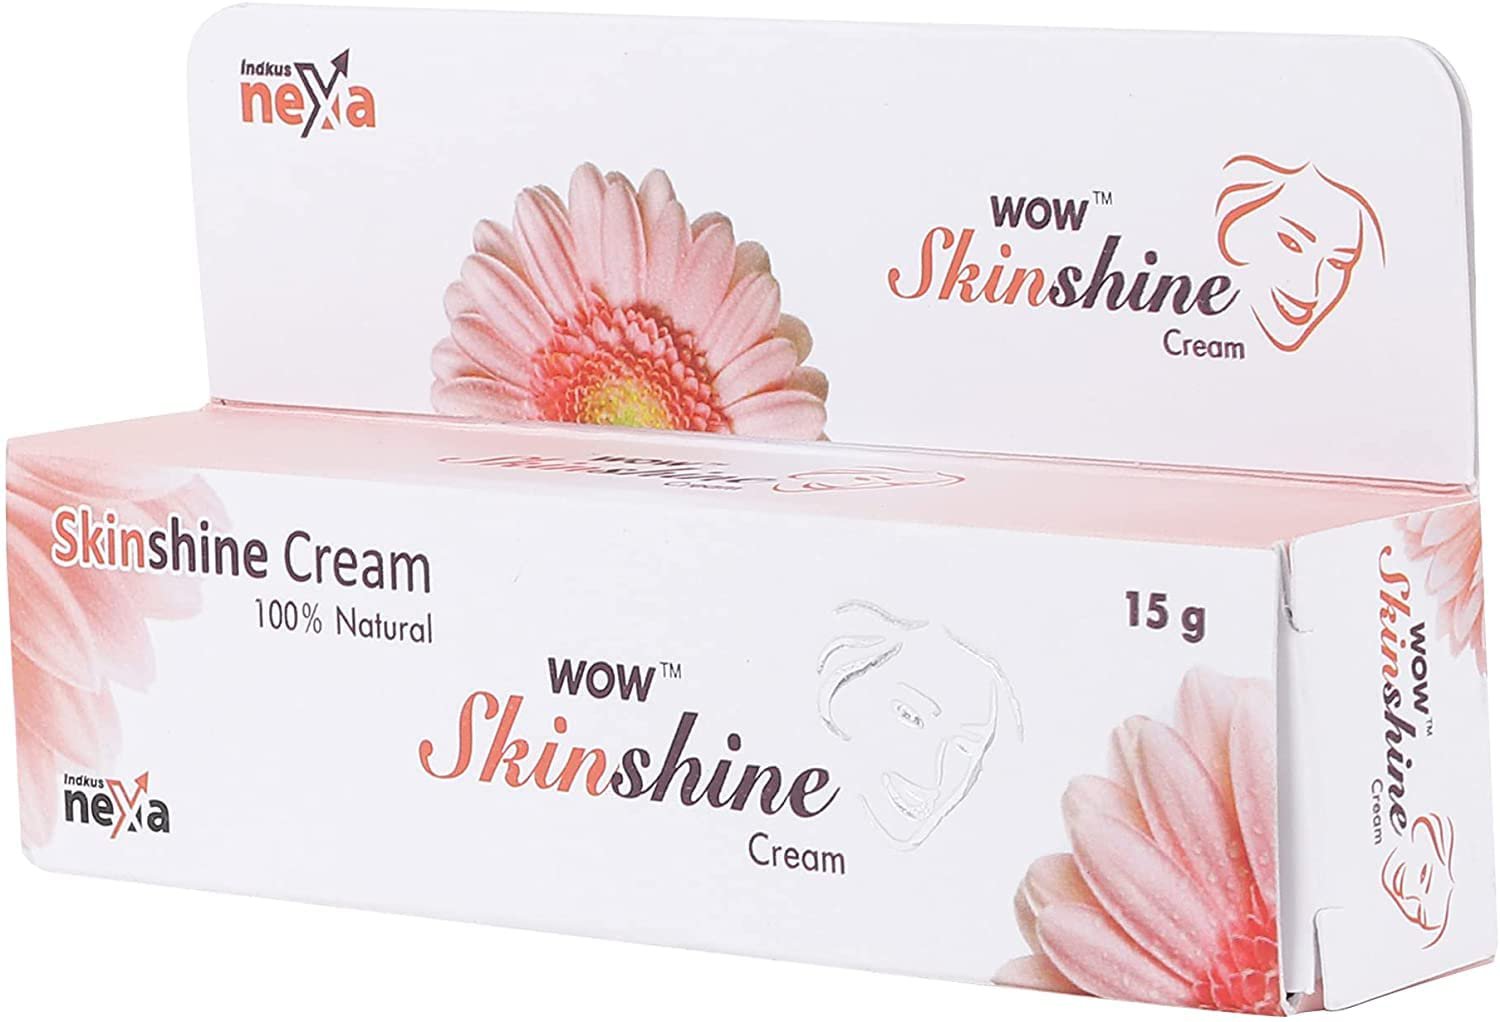 Skin shine face cream-15gm ( Pack of 2)